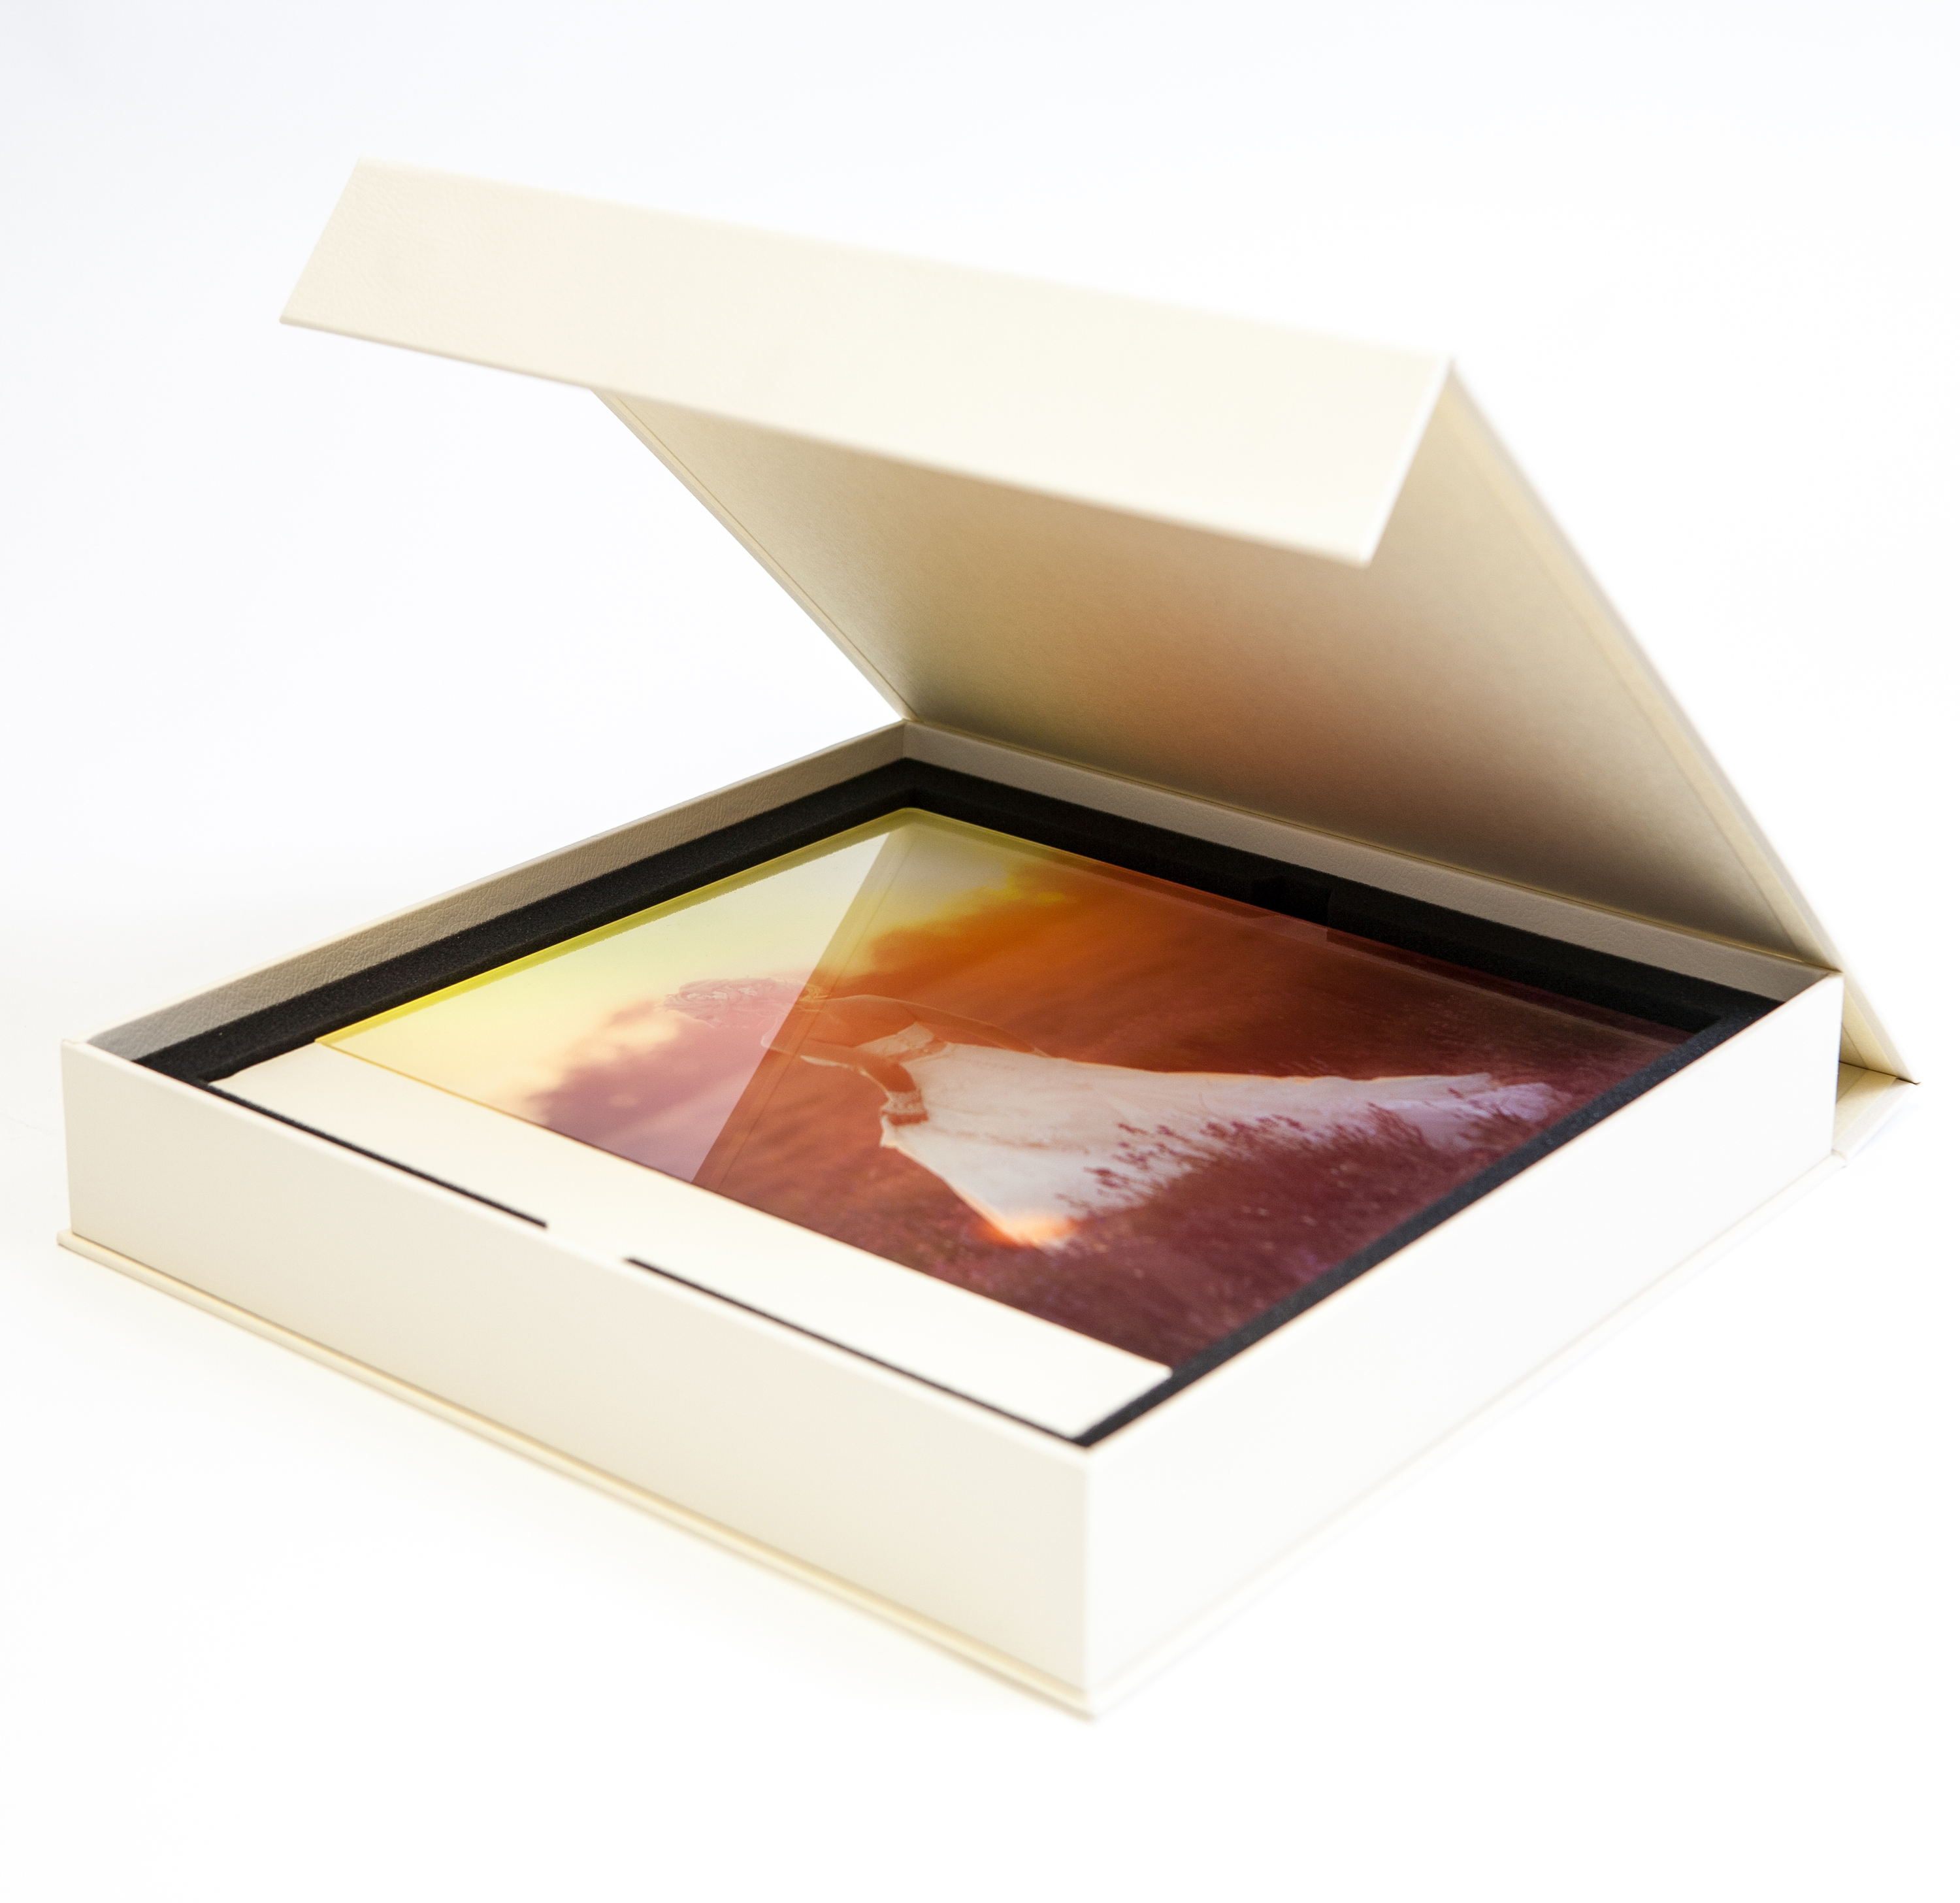 Acrylic glass photo book in presentation box